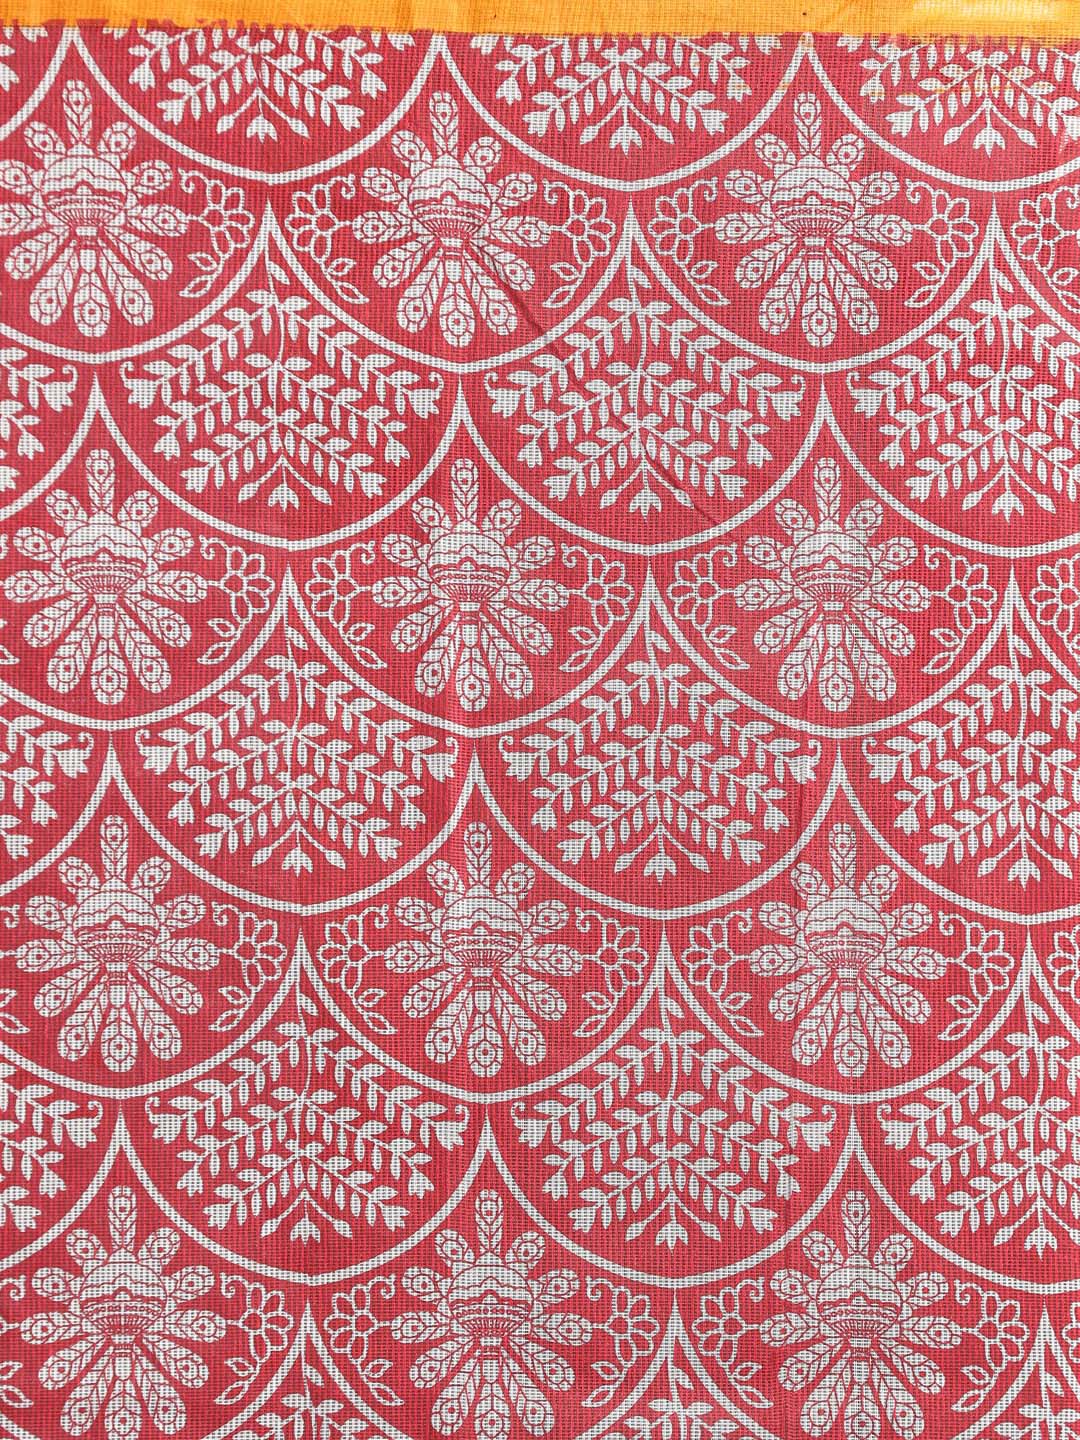 Indethnic Printed Super Net Saree in Maroon - Saree Detail View